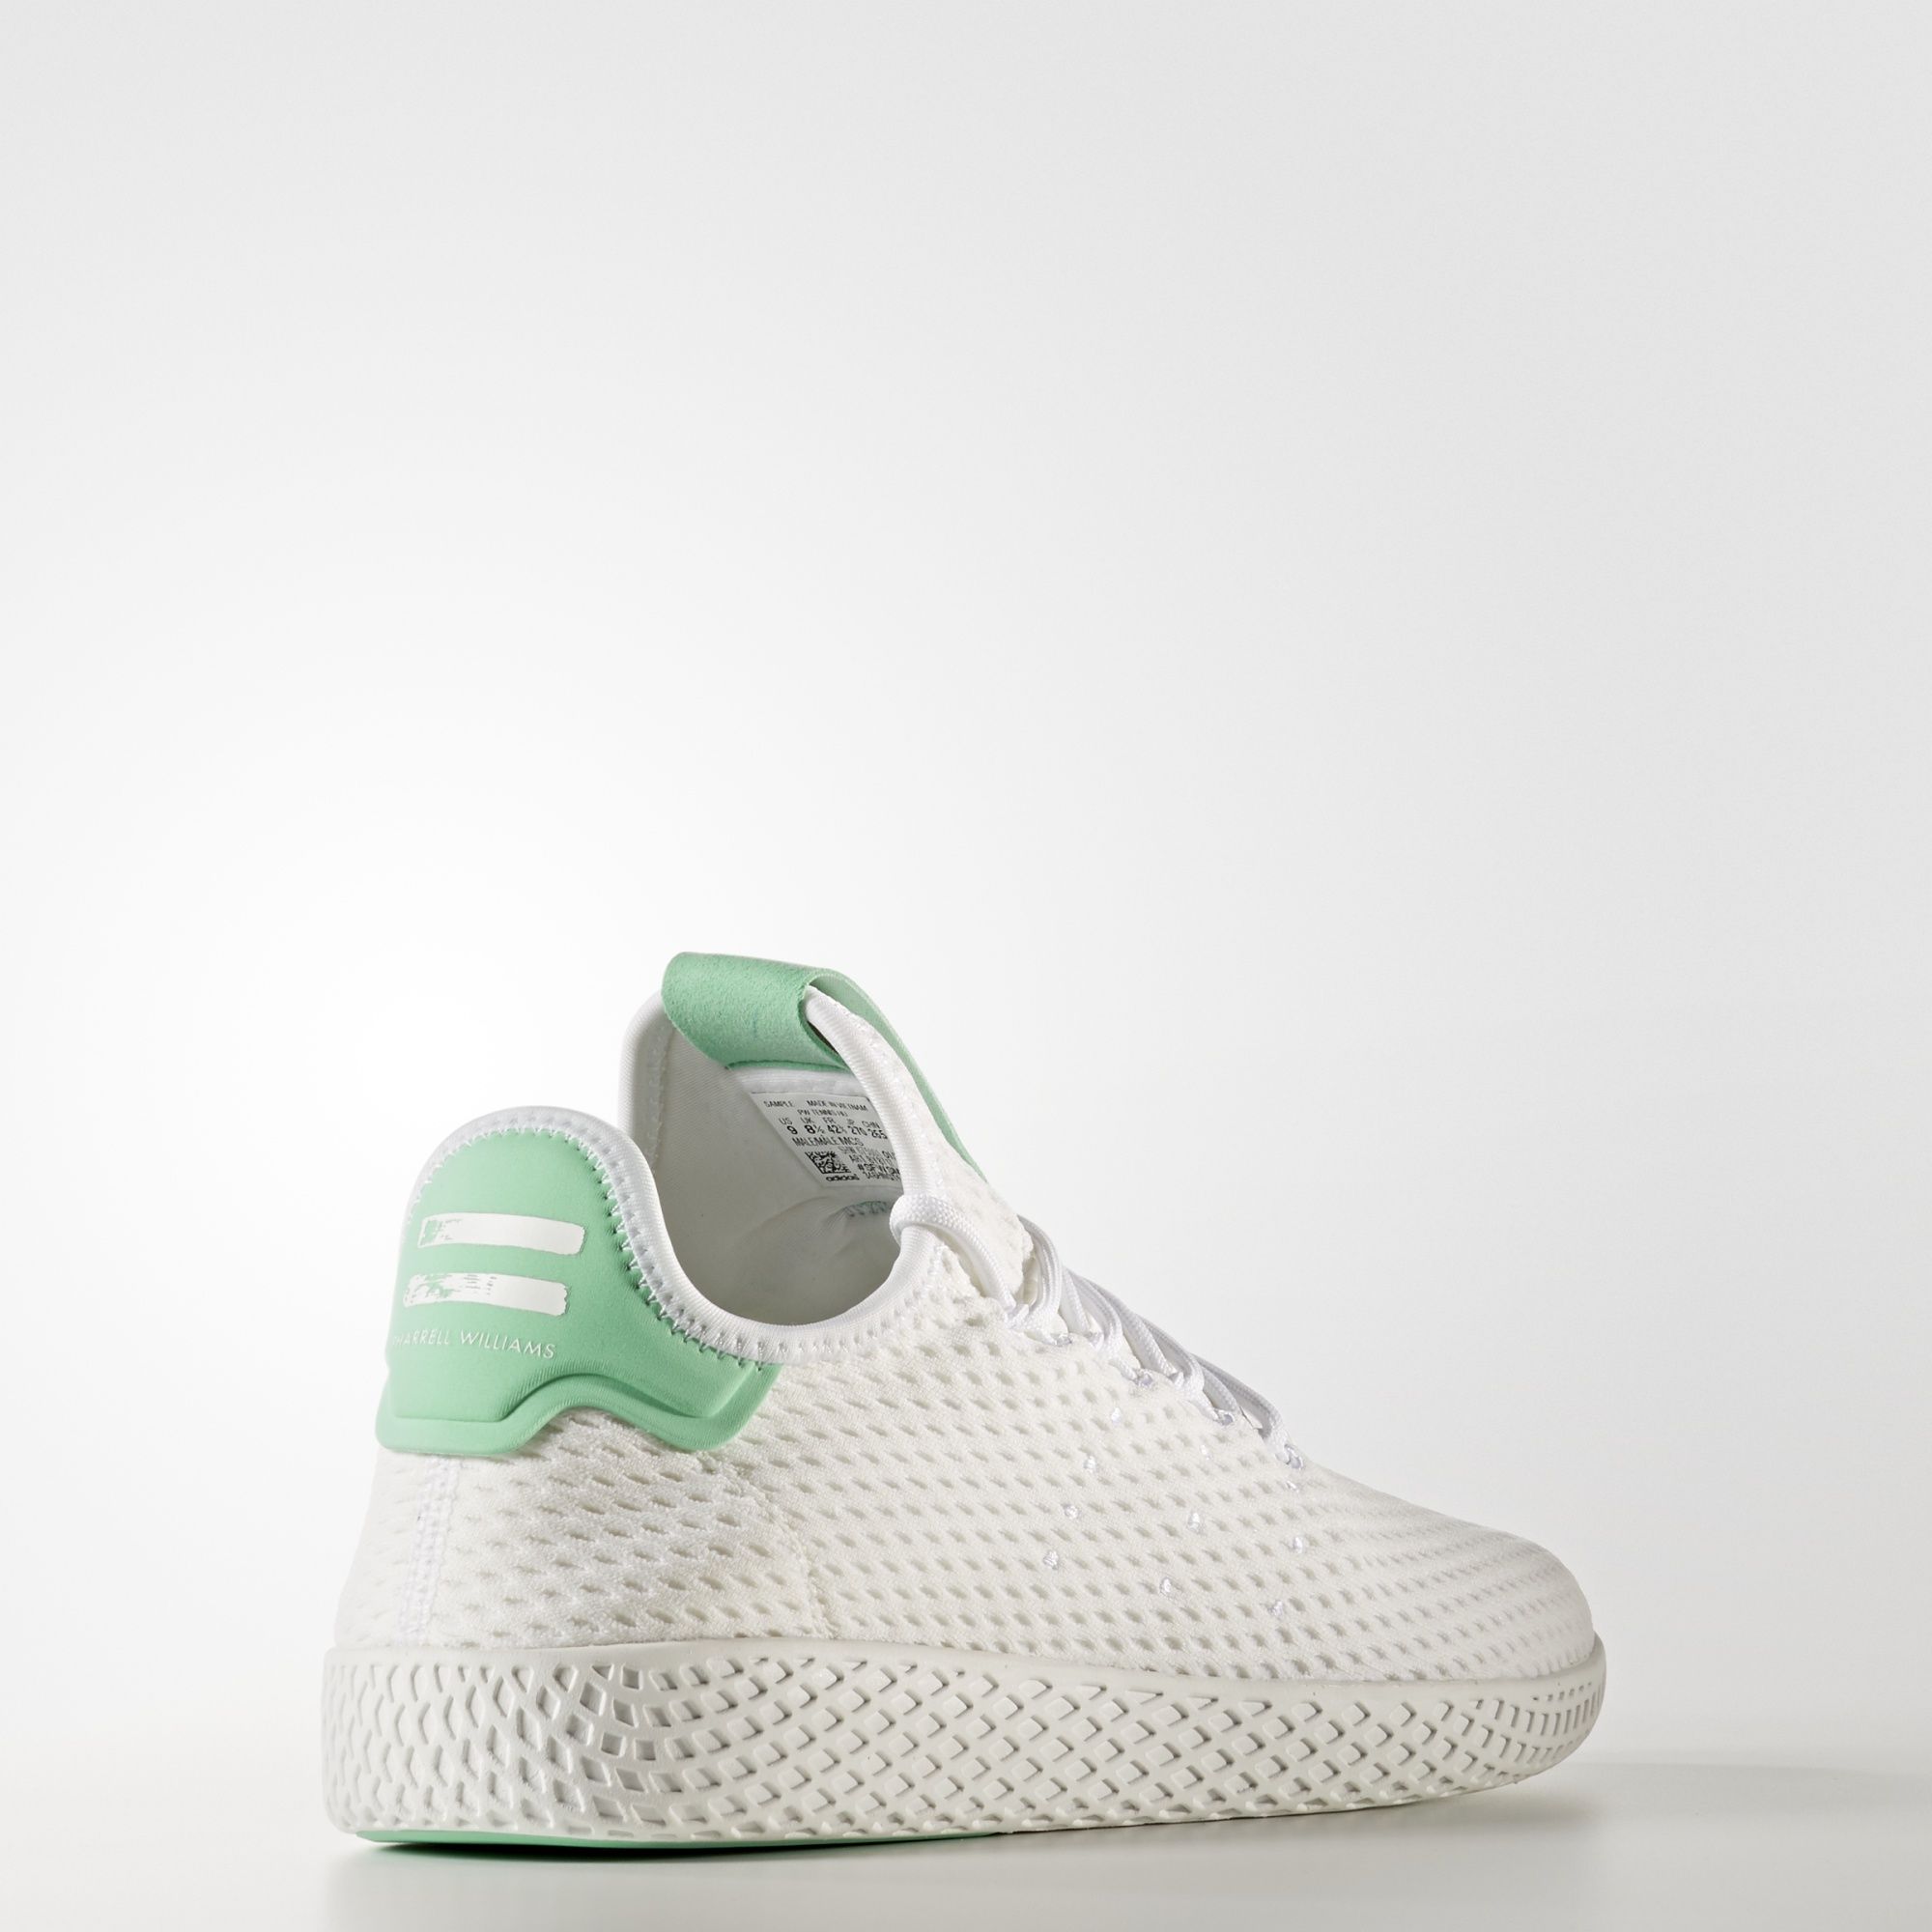 BY8717 Pharrell Williams x adidas Tennis HU White Green Glow 3